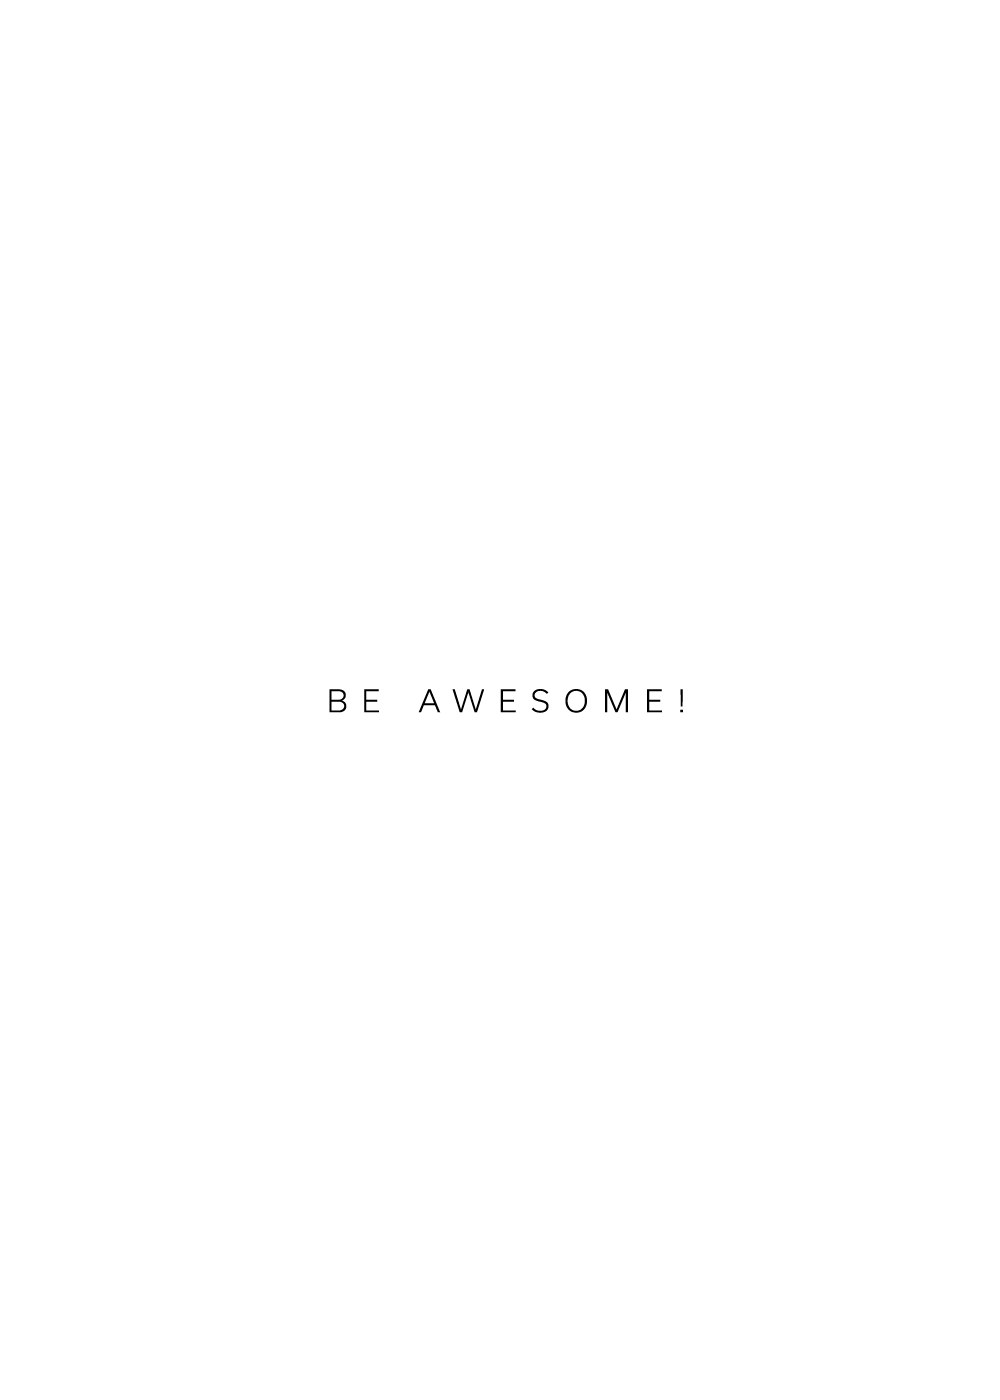 "Be awesome!" citatplakat